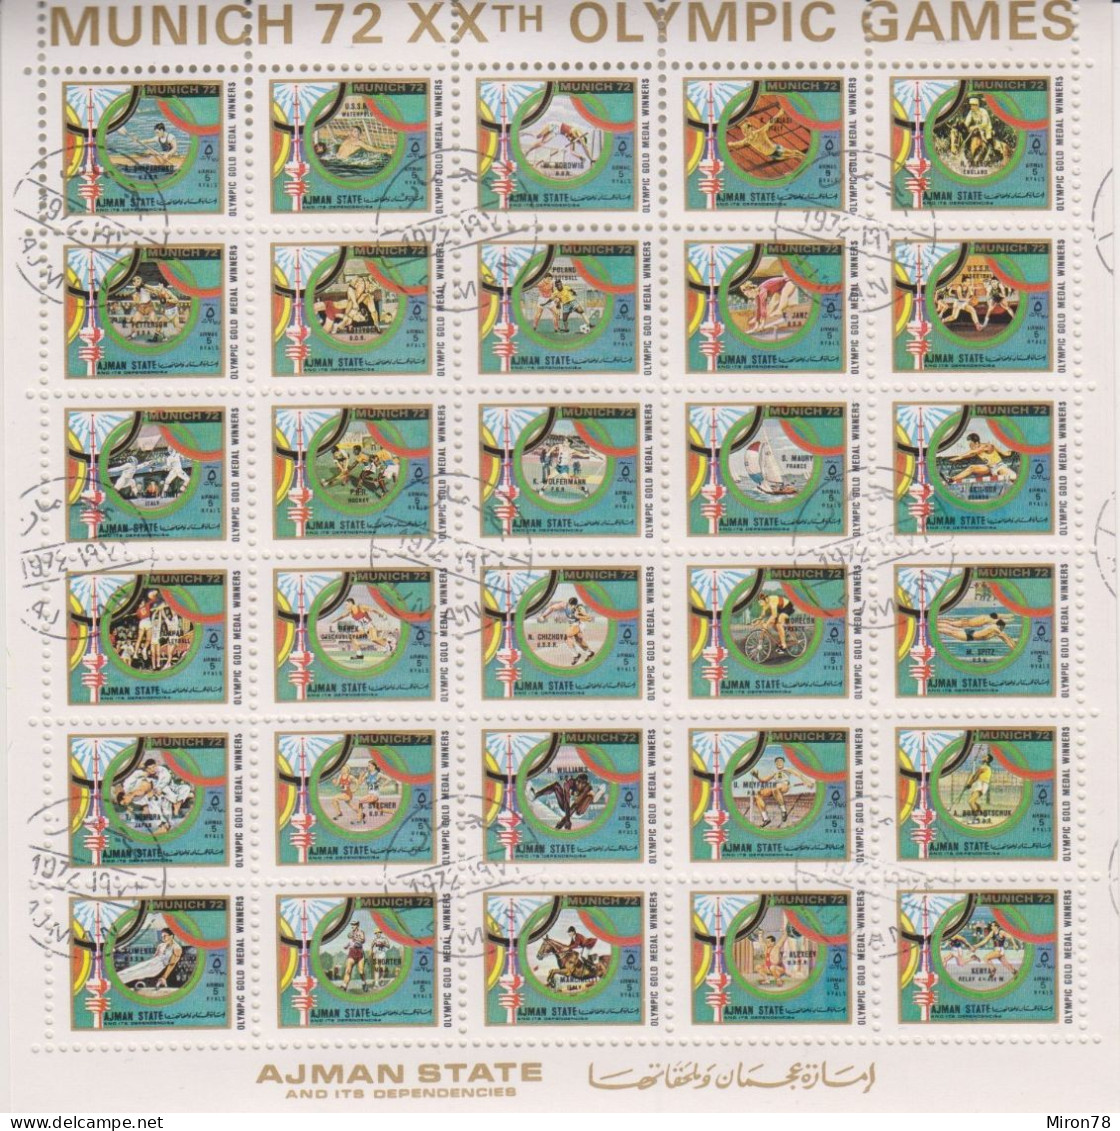 AJMAN OLYMPIC GAMES MUNICH 1972 #1605-34 SH USED (MNH-MICHEL 150 EURO!!!) - Zonder Classificatie